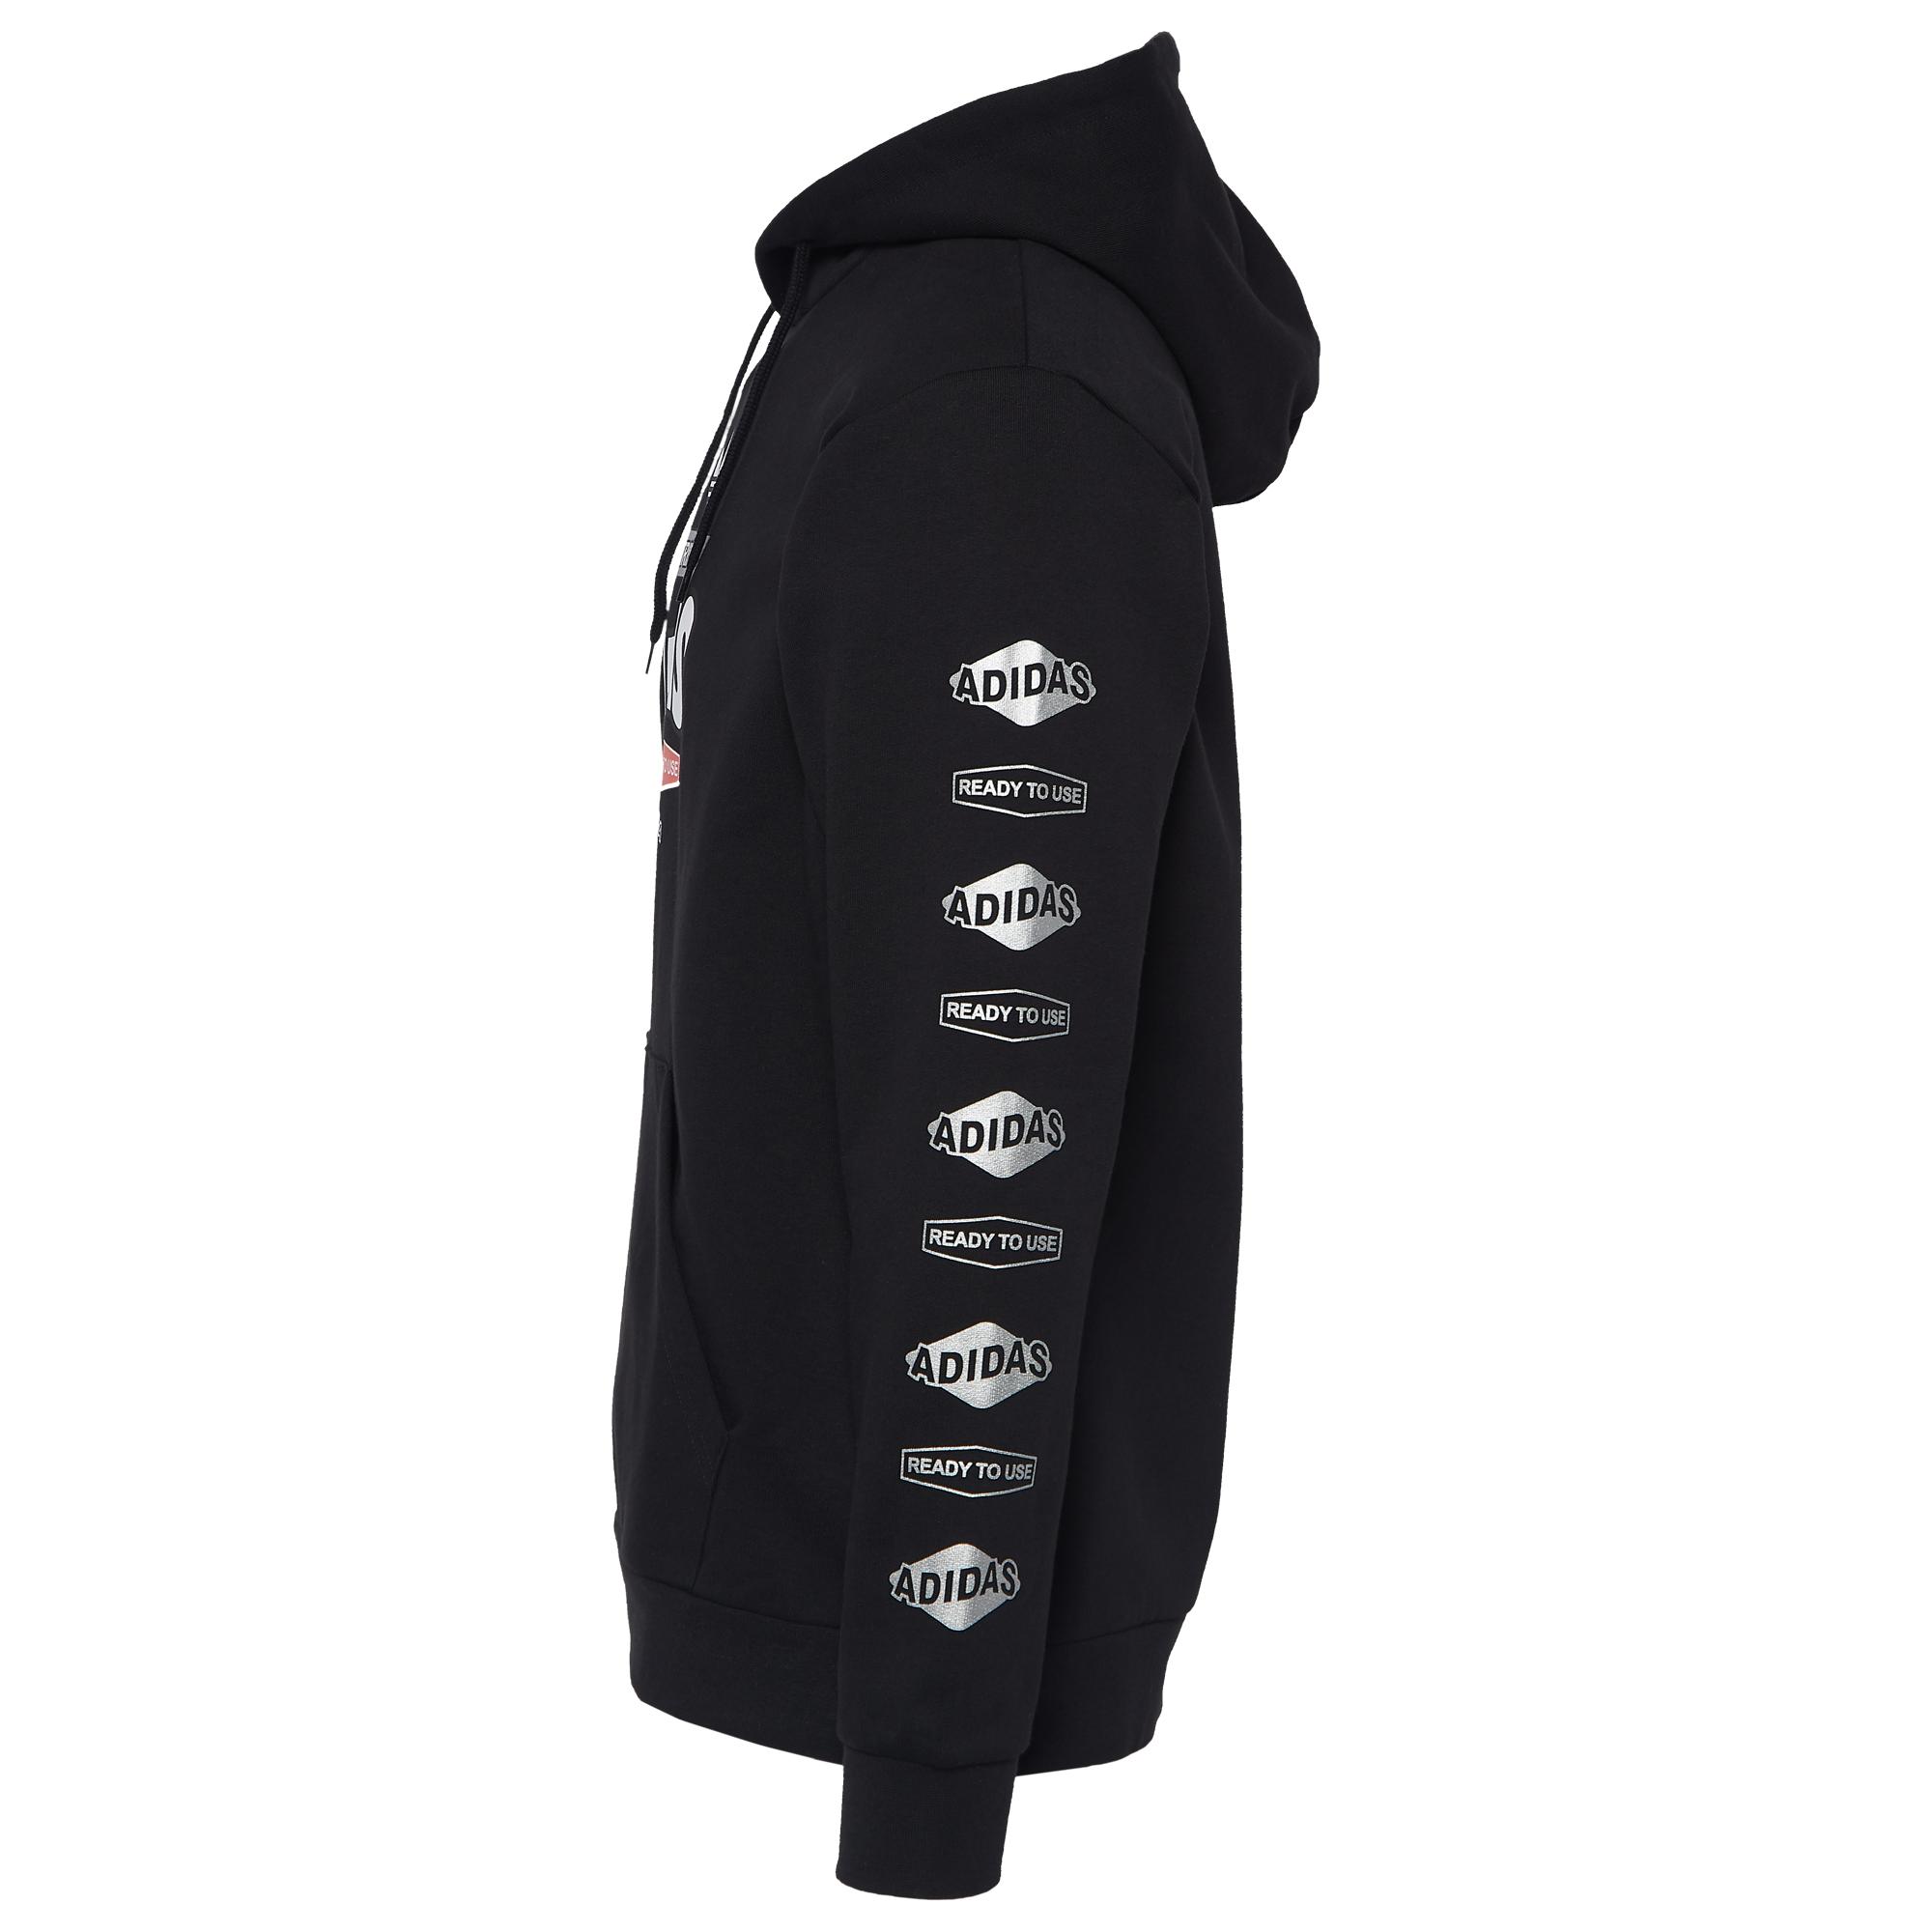 adidas Originals Fleece Bodega Pullover Hoodie in Black for Men - Lyst